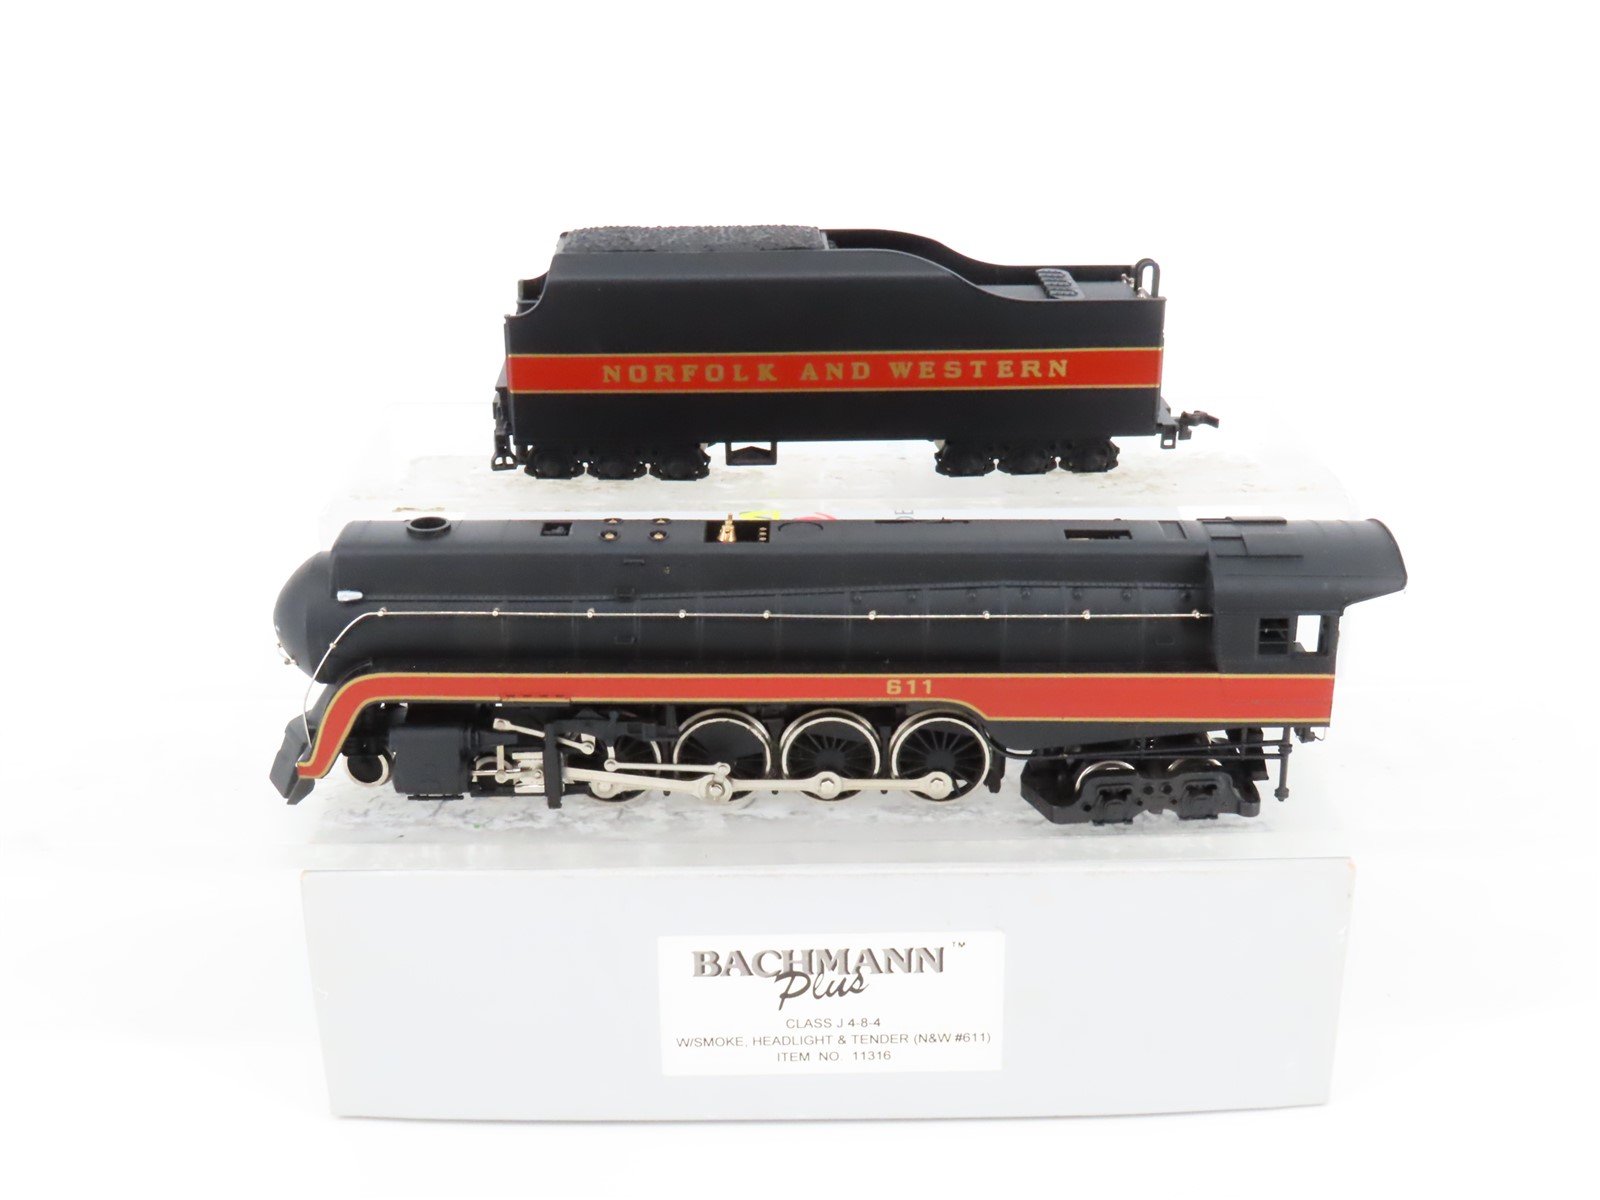 HO Scale Bachmann 11316 N&W Norfolk & Western 4-8-4 Steam Locomotive #611